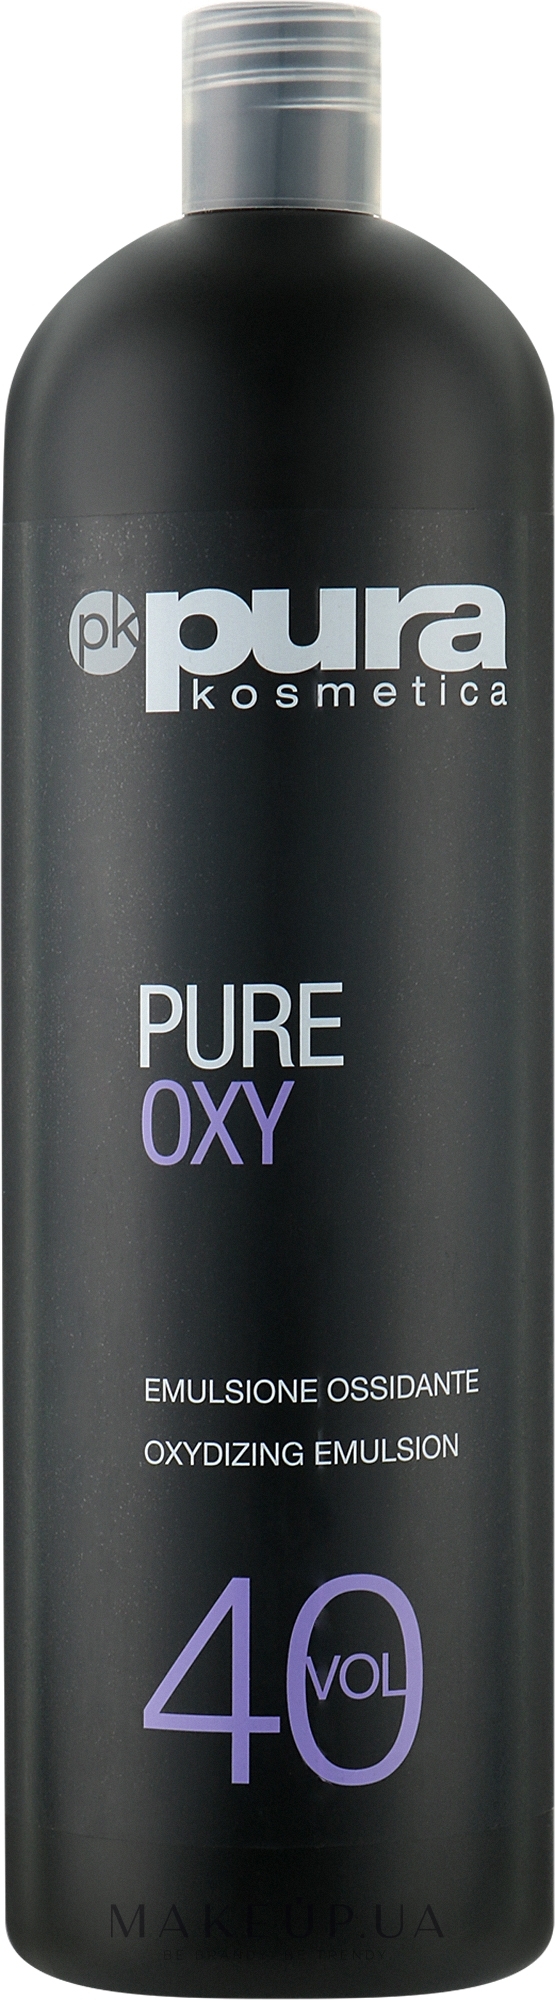 Окислитель для краски 12% - Pura Kosmetica Pure Oxy 40 Vol — фото 1000ml